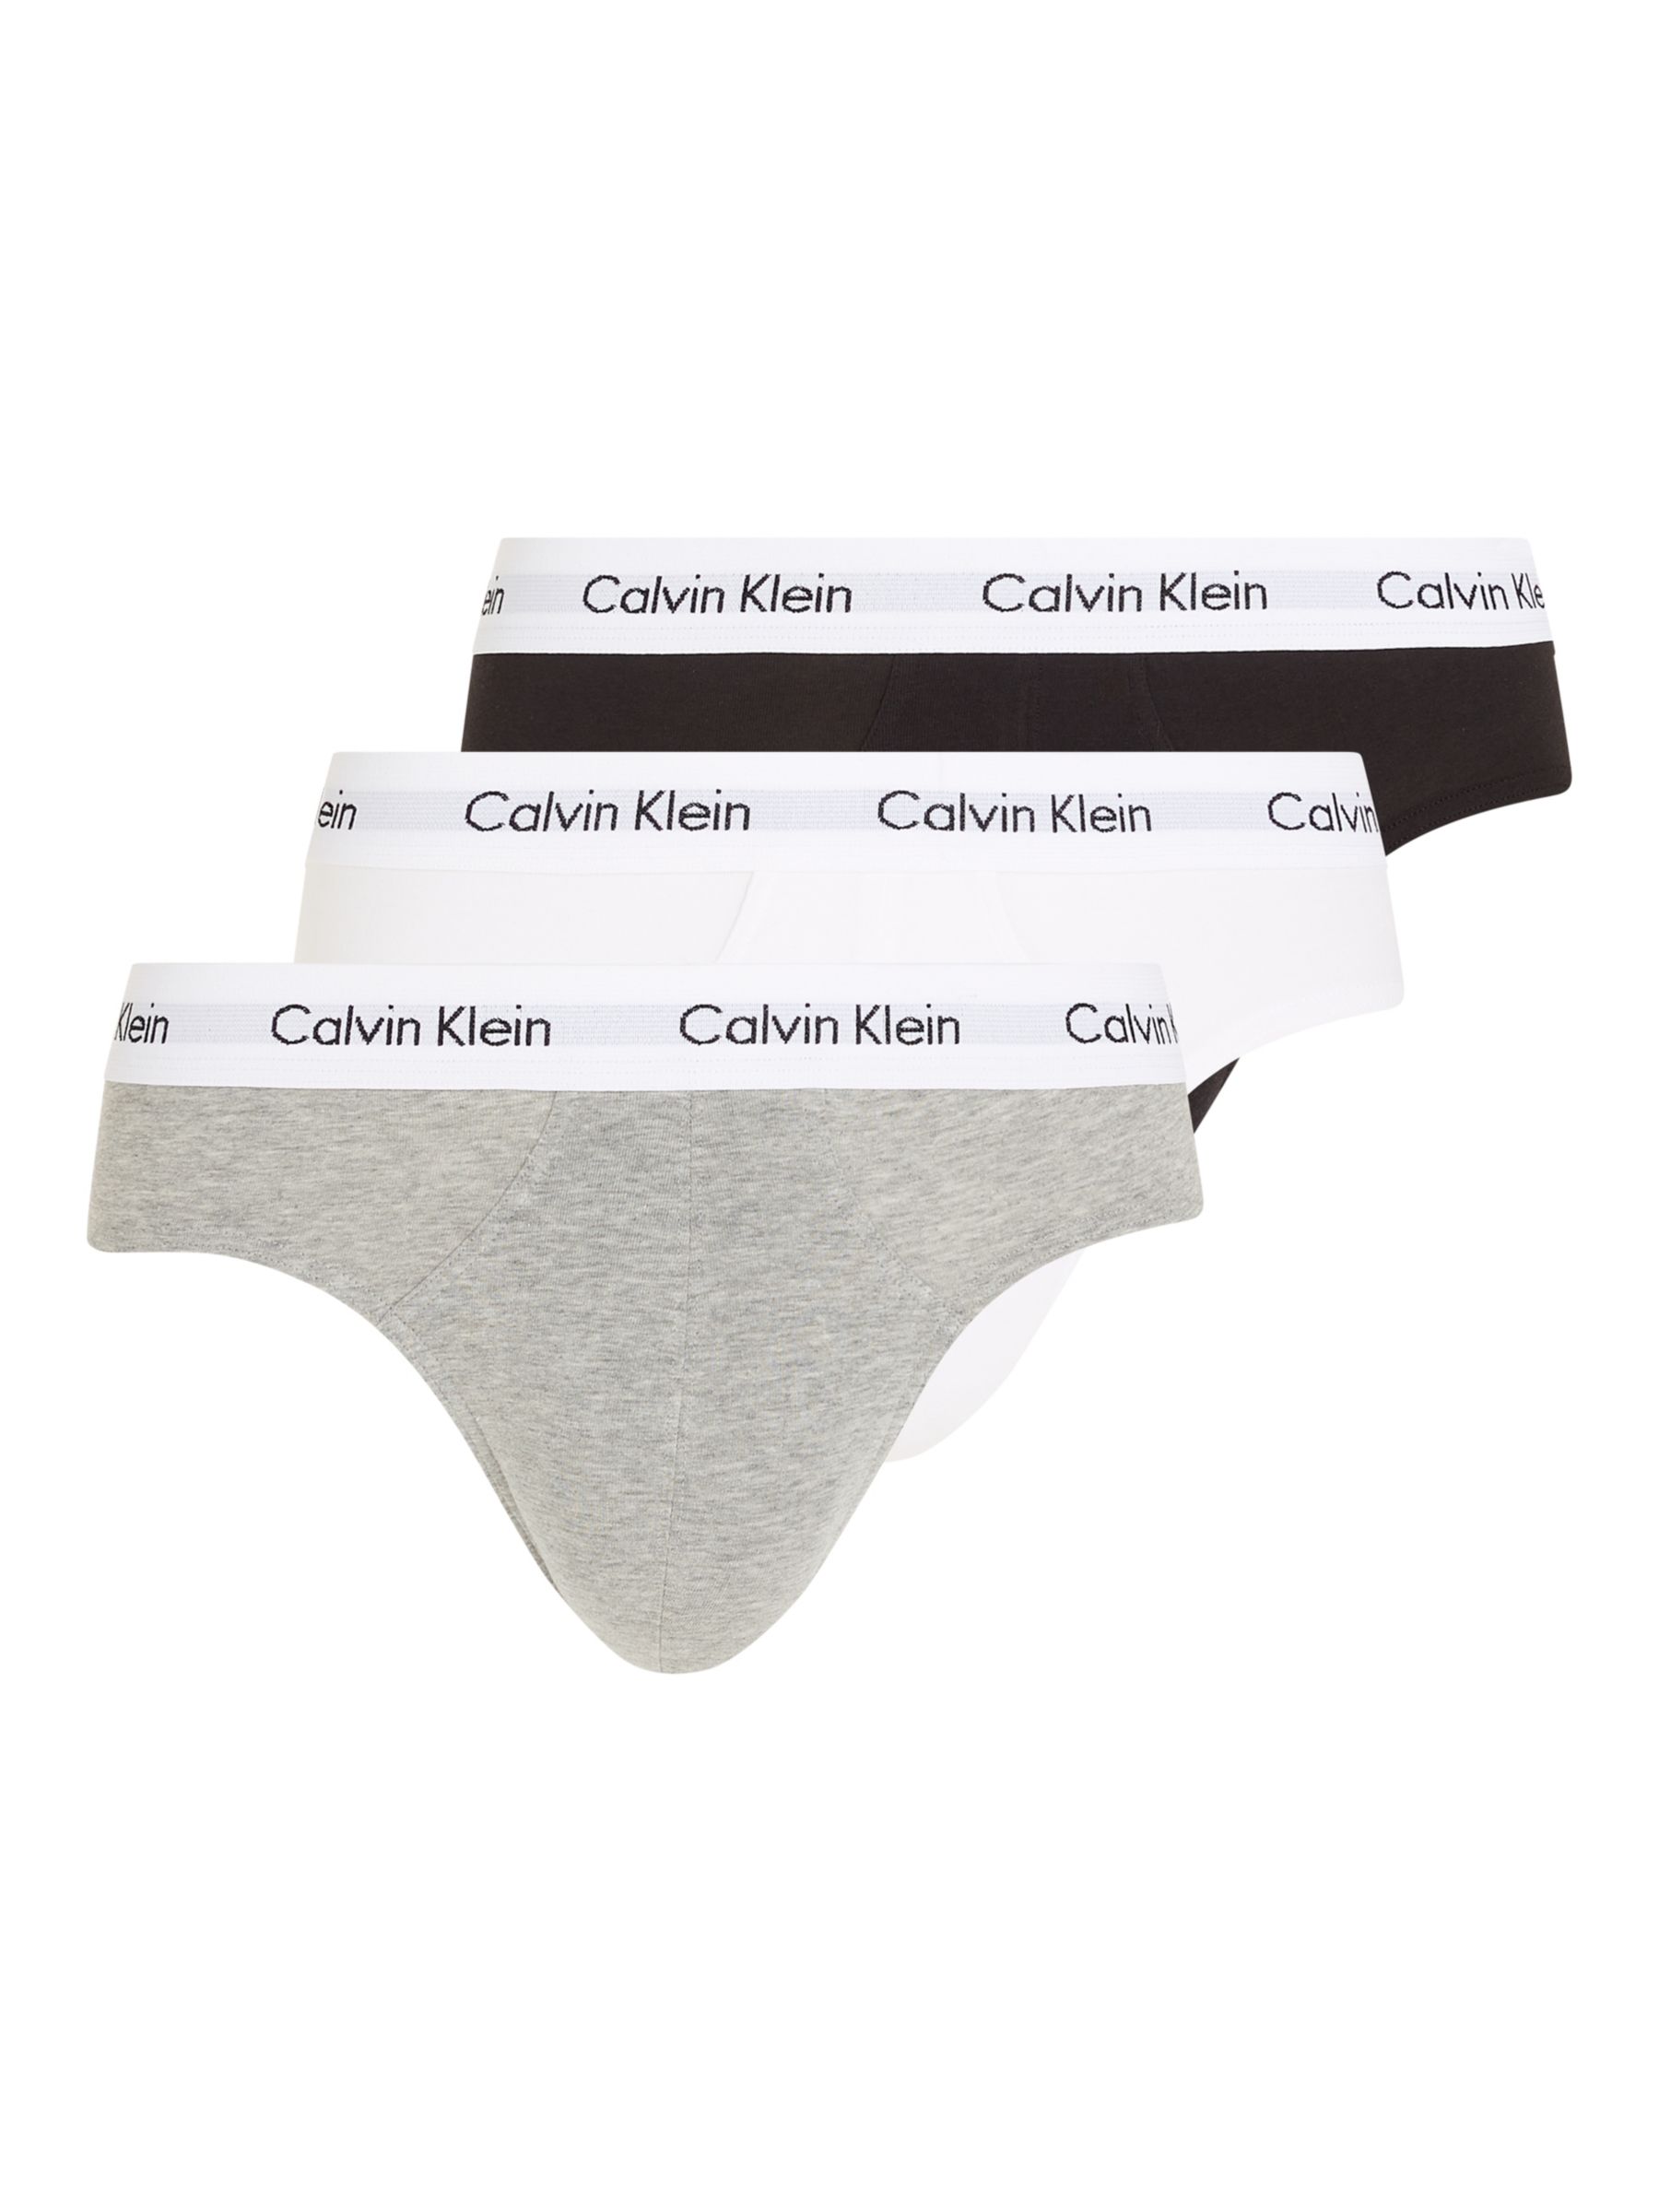 Girls Calvin Klein Panties UNDERWEAR SMALL (6/6X) 3 Pair Brand New No Tags  